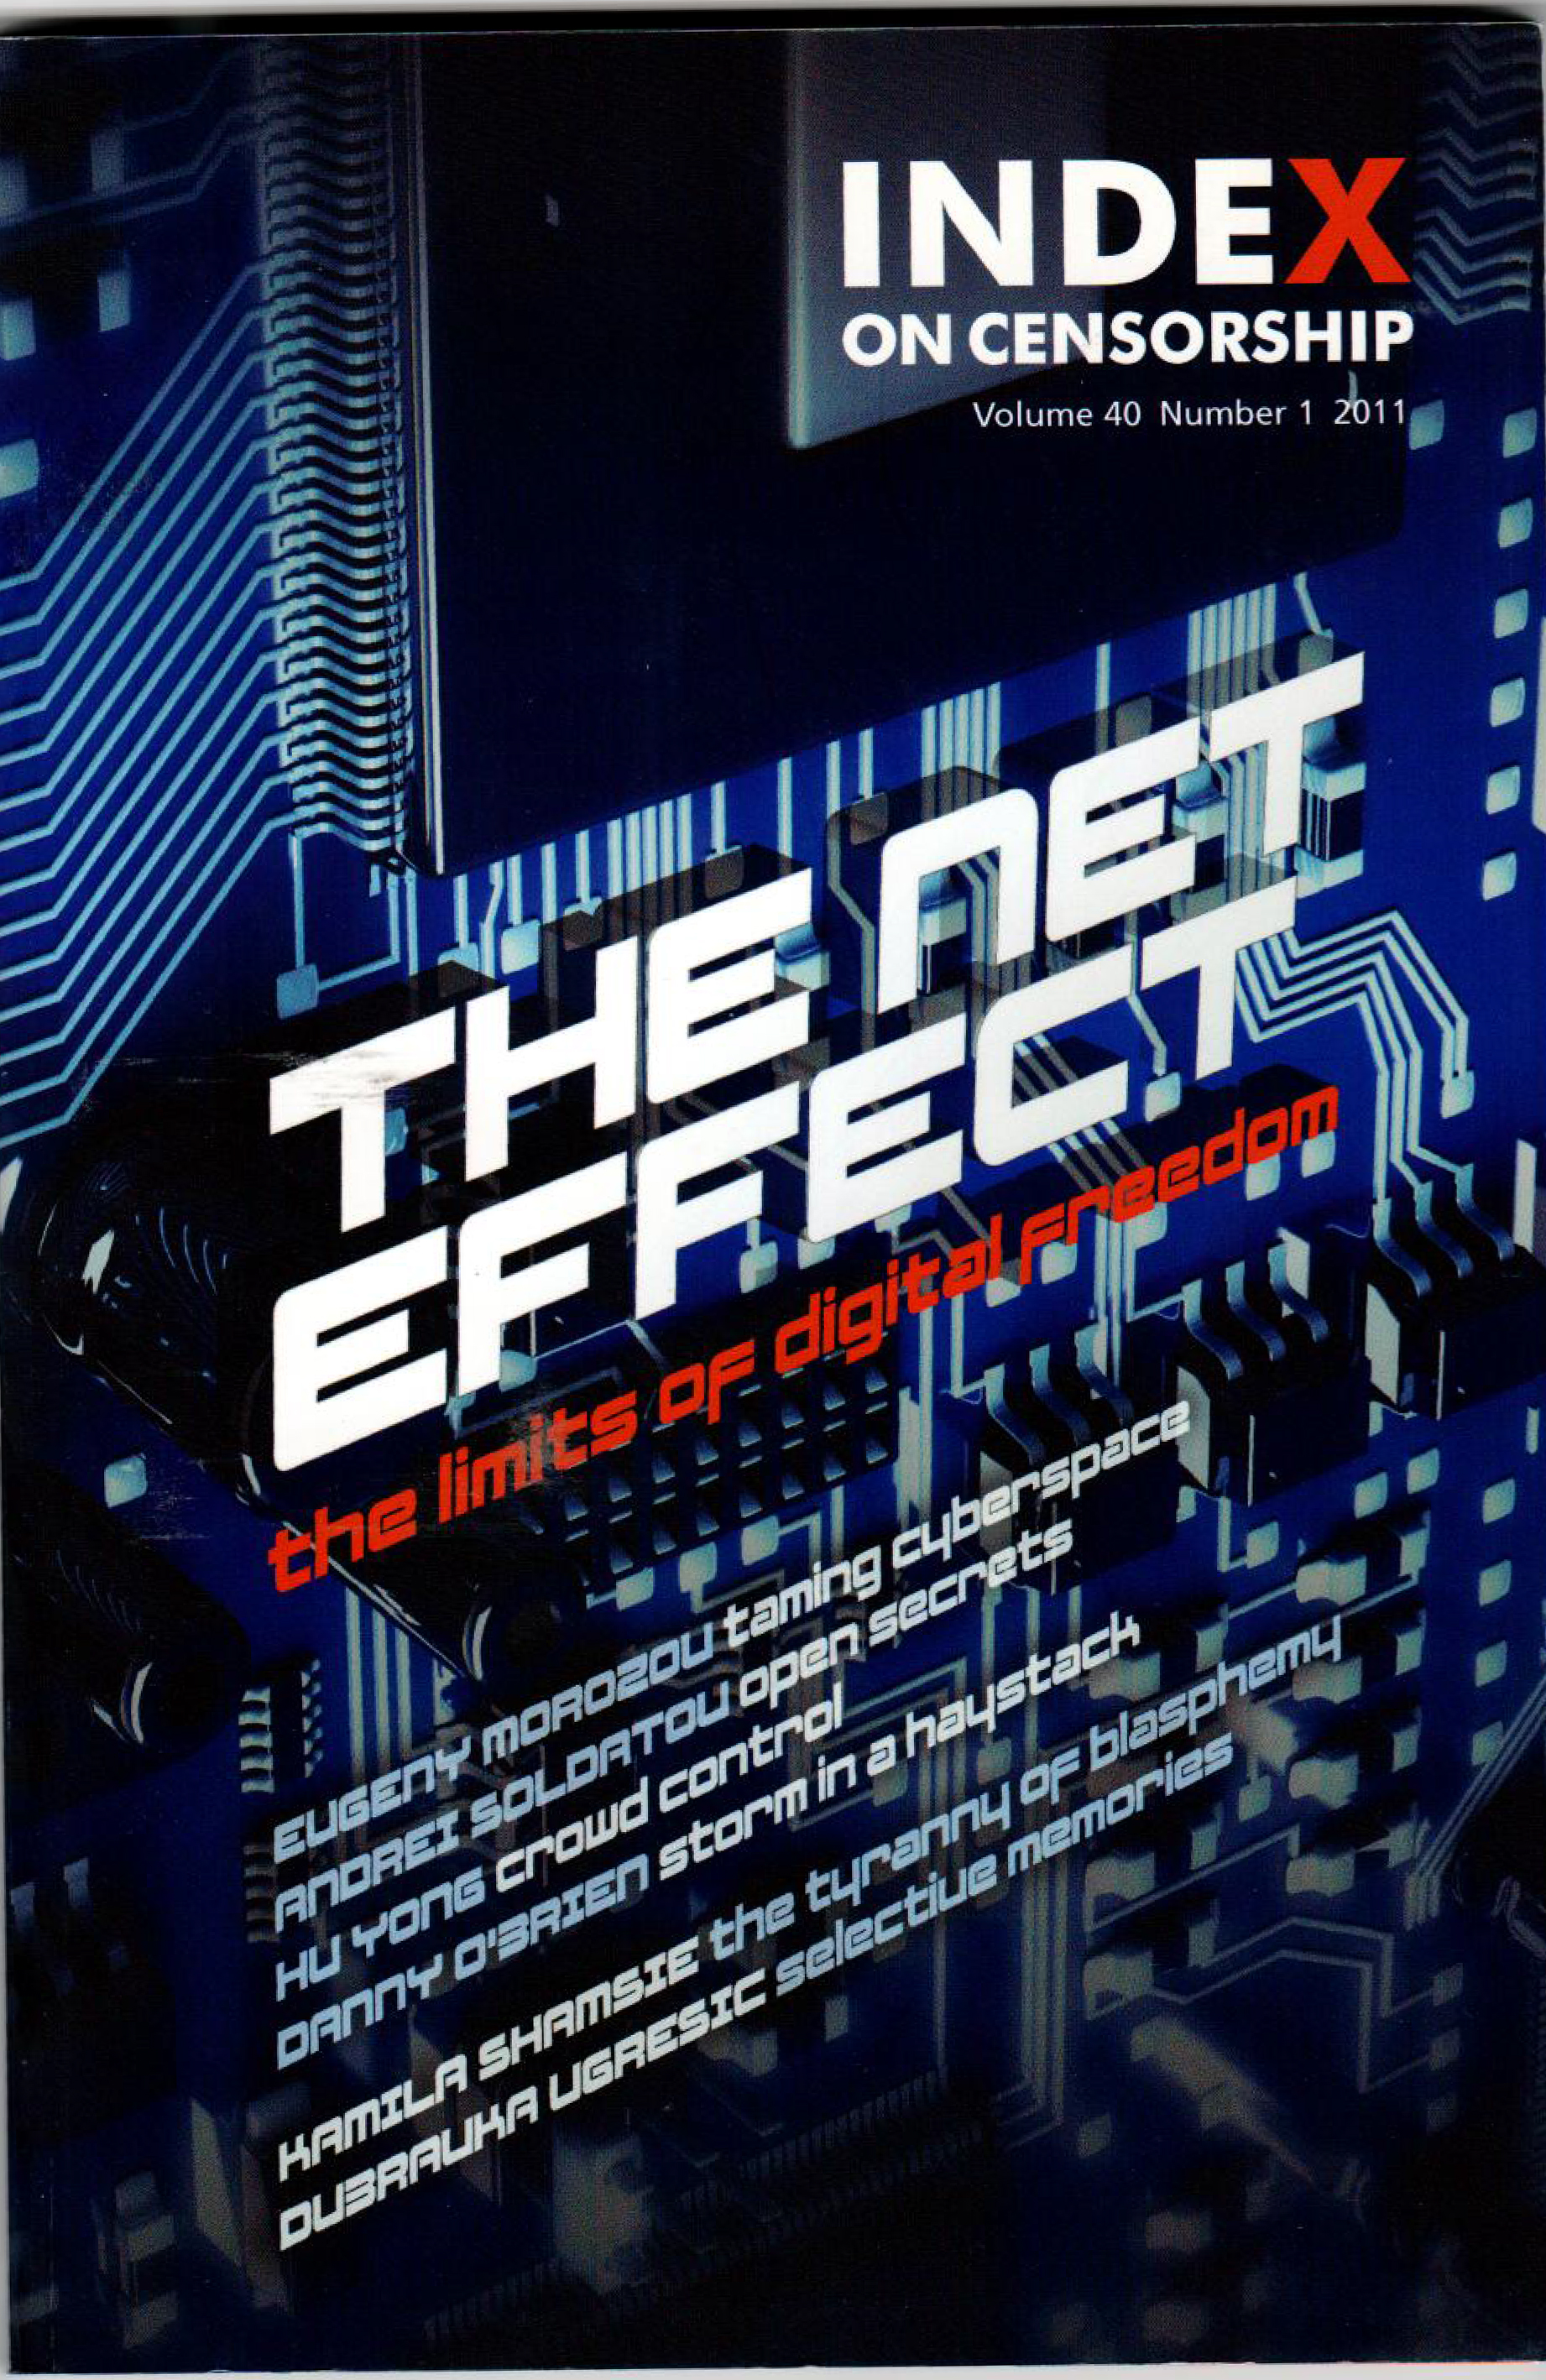 The net effect